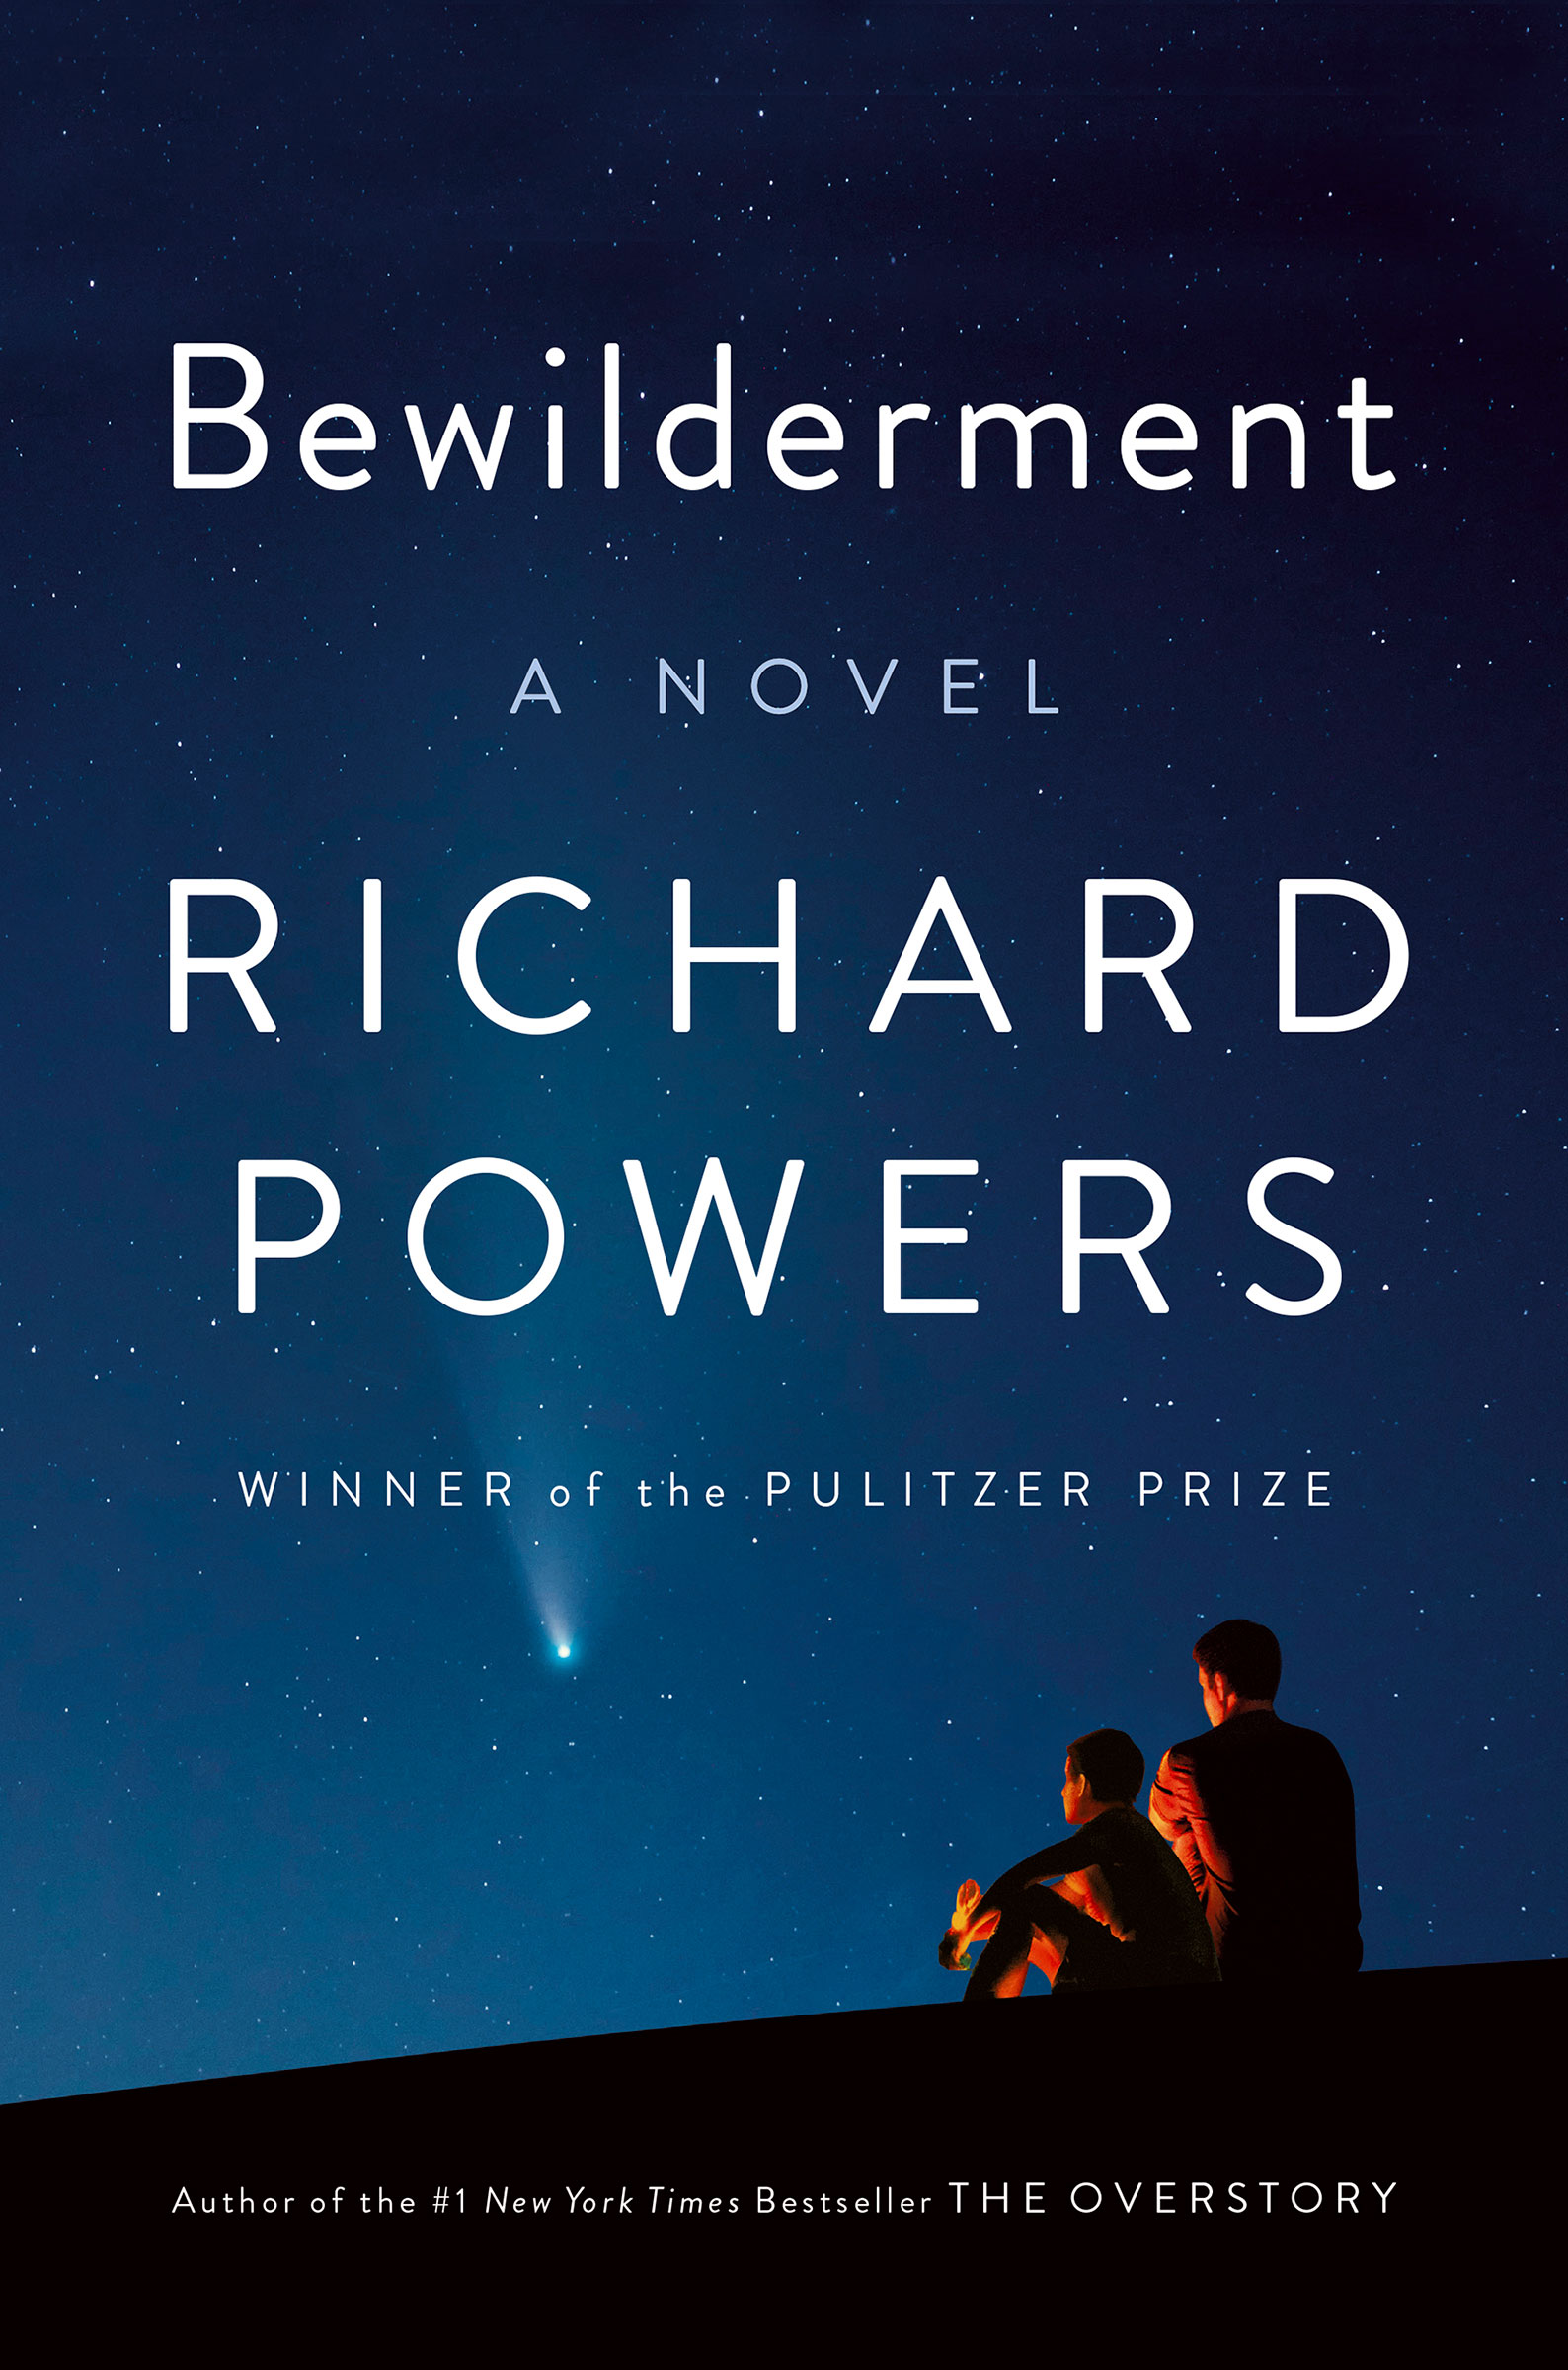 The cover art of Richard Powers' book Bewilderment